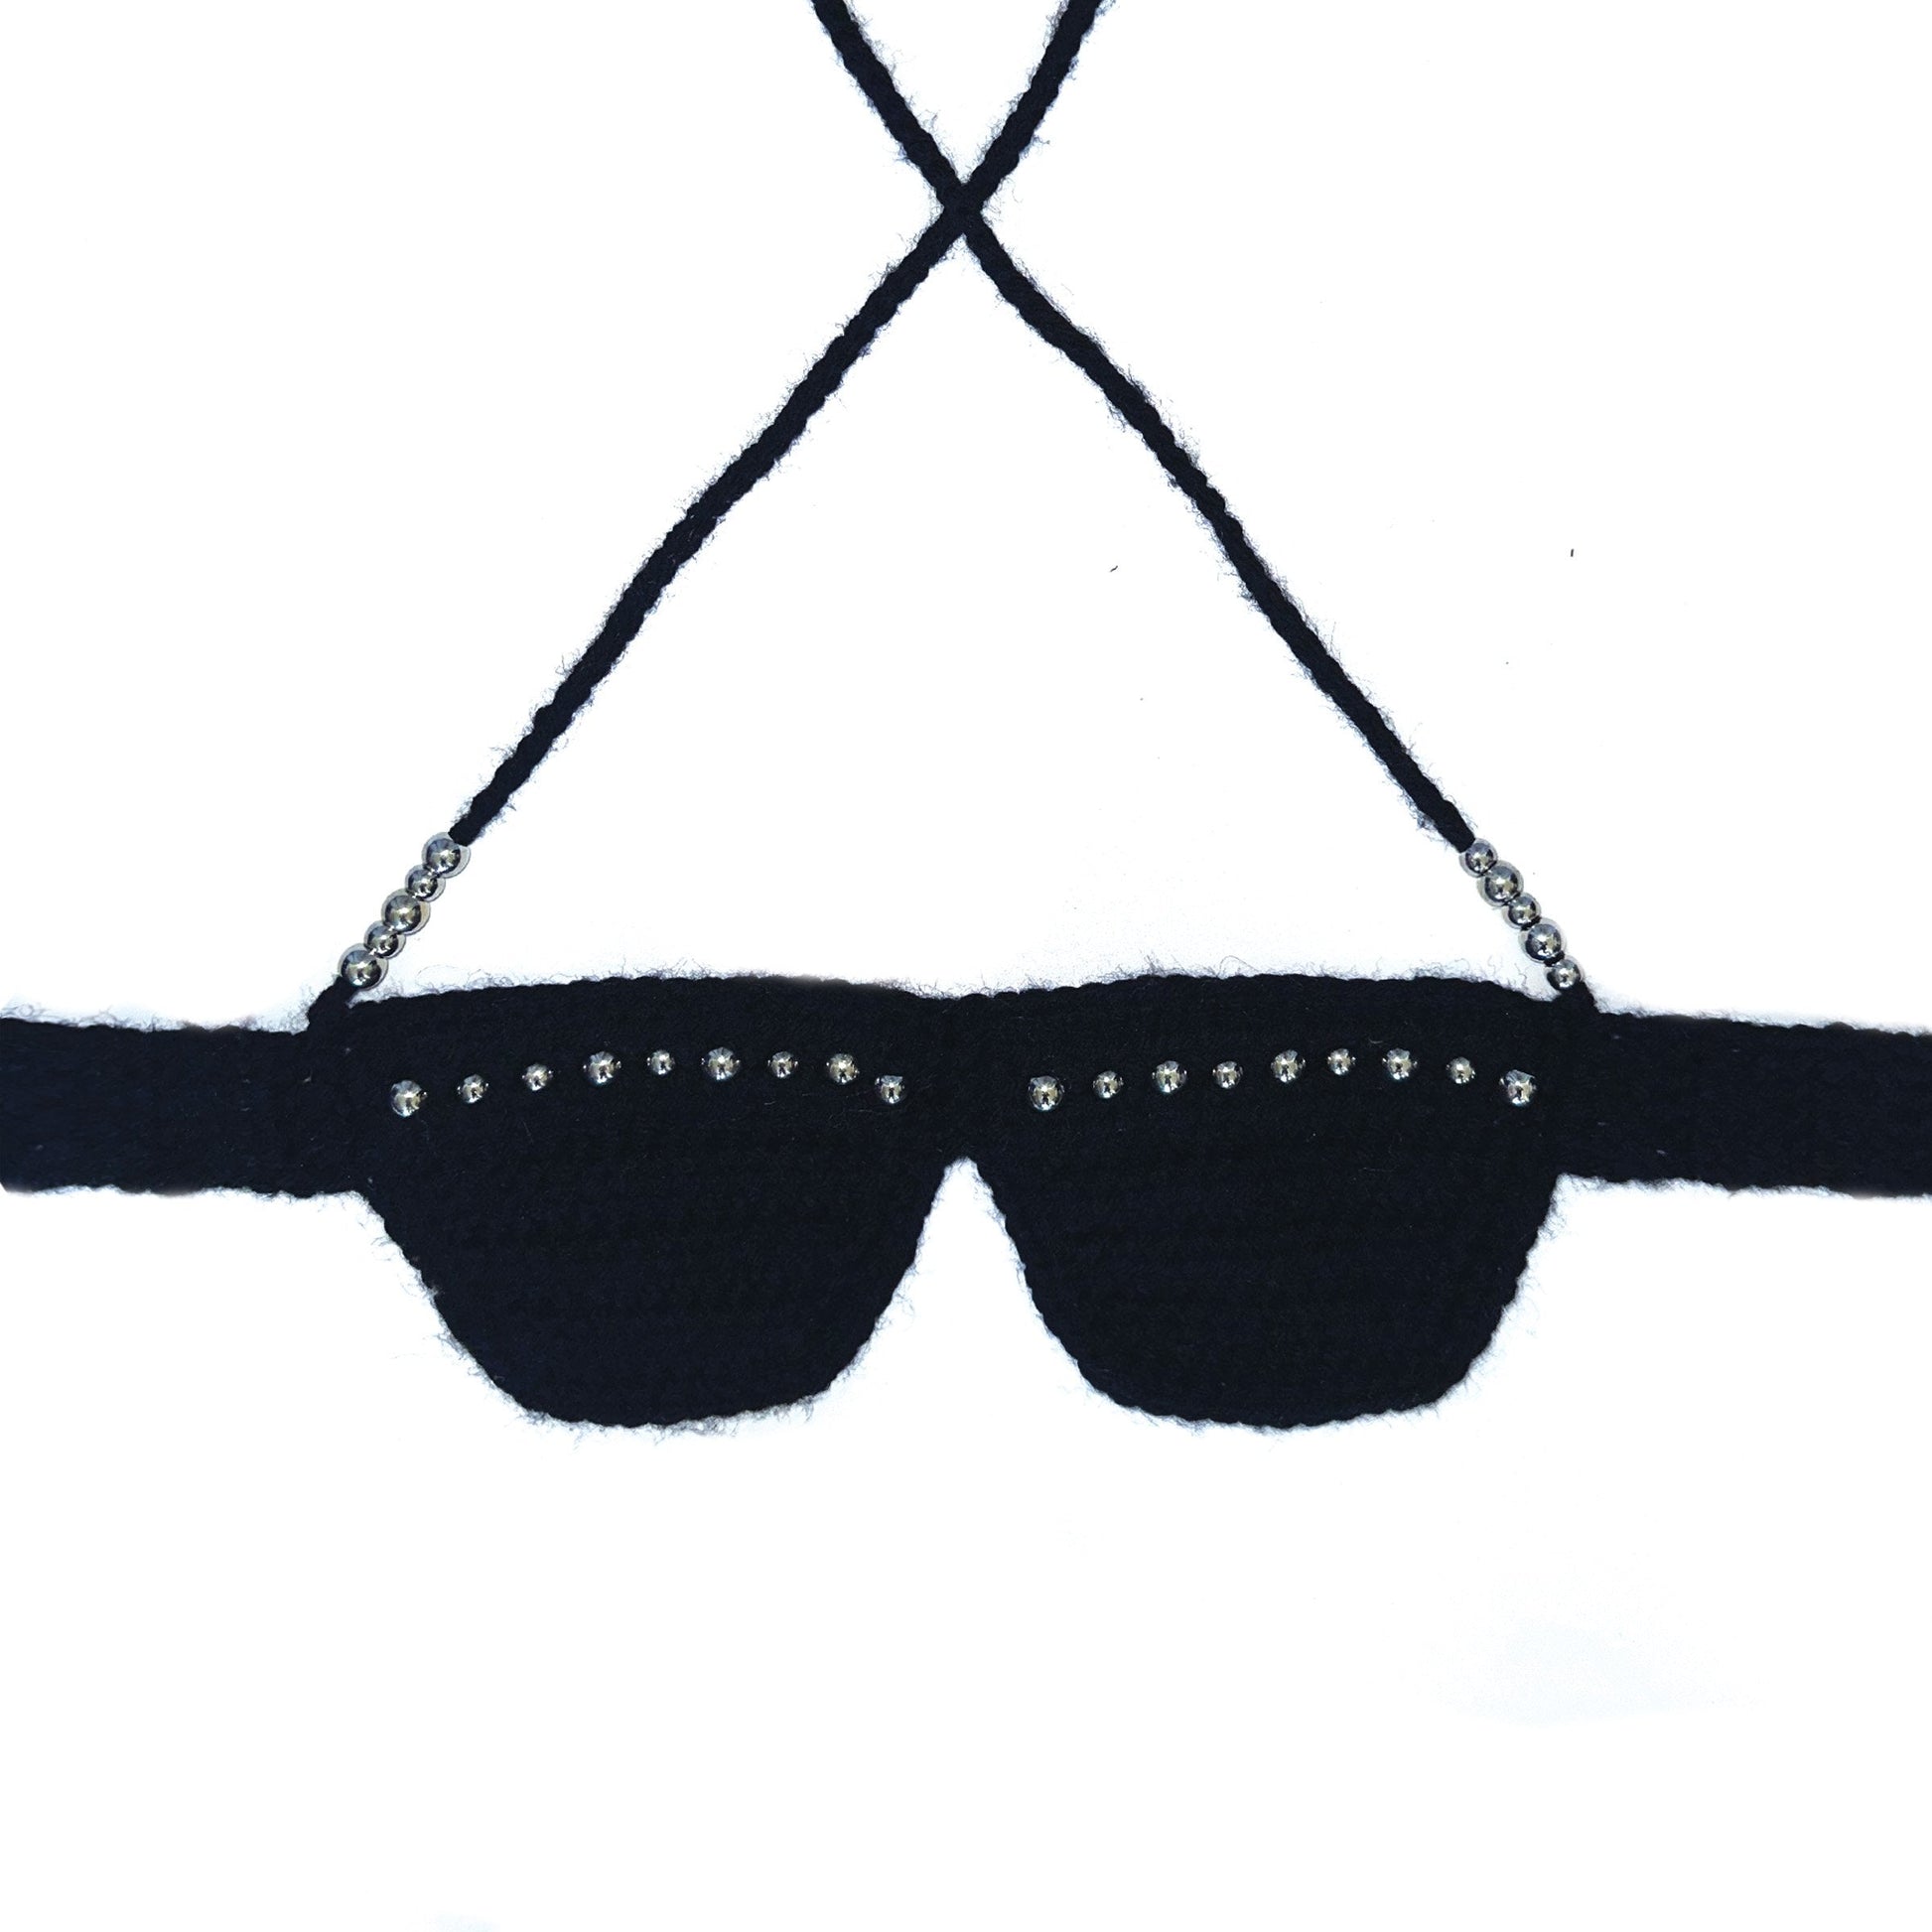 black crochet bra top with beads